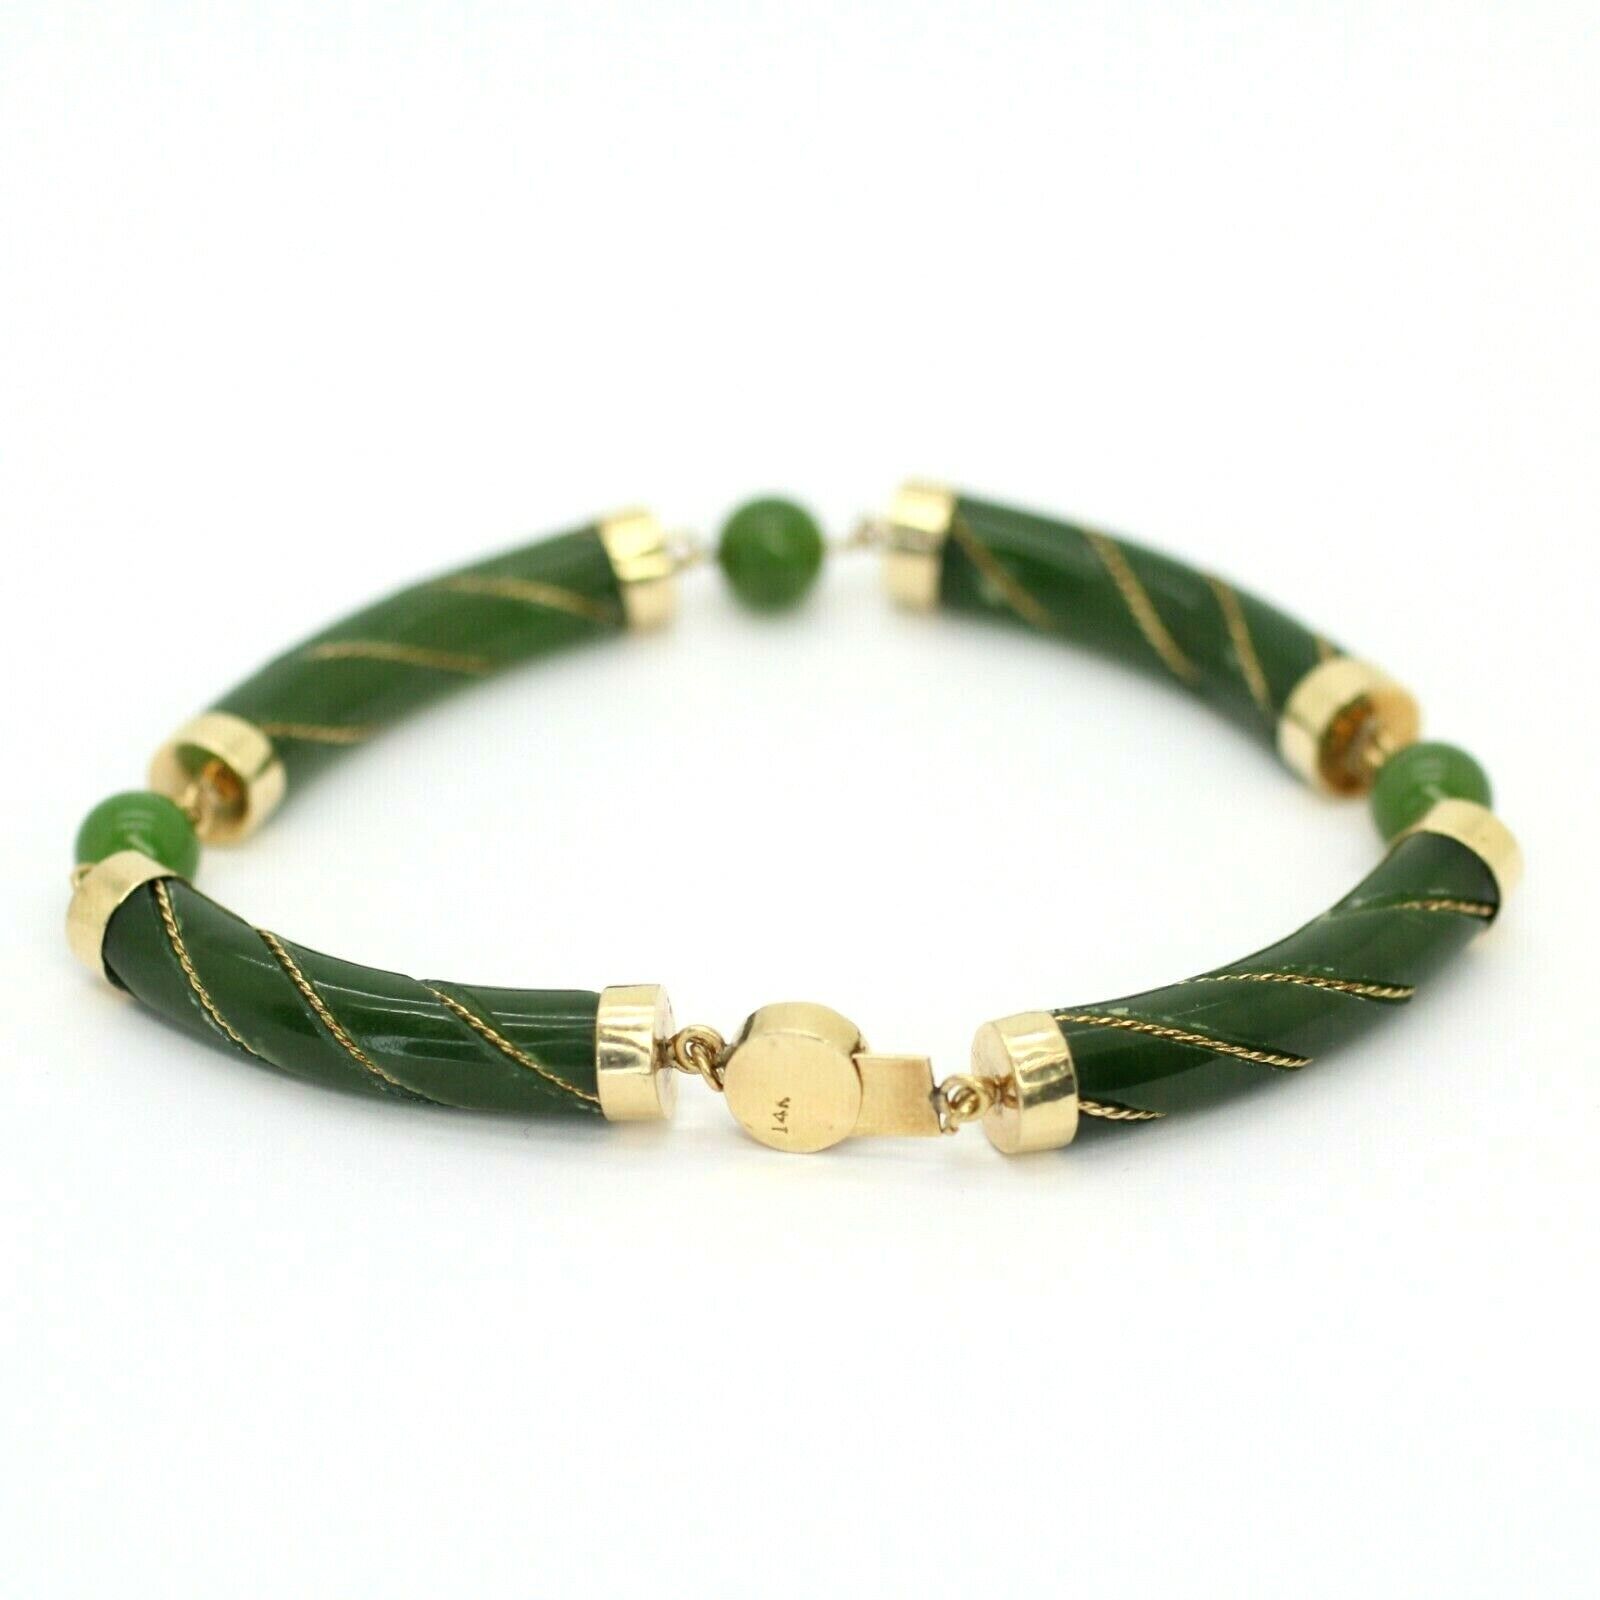 Vintage Forest Green Jade Gemstone Bracelet in 14k Yellow Gold 7.5"